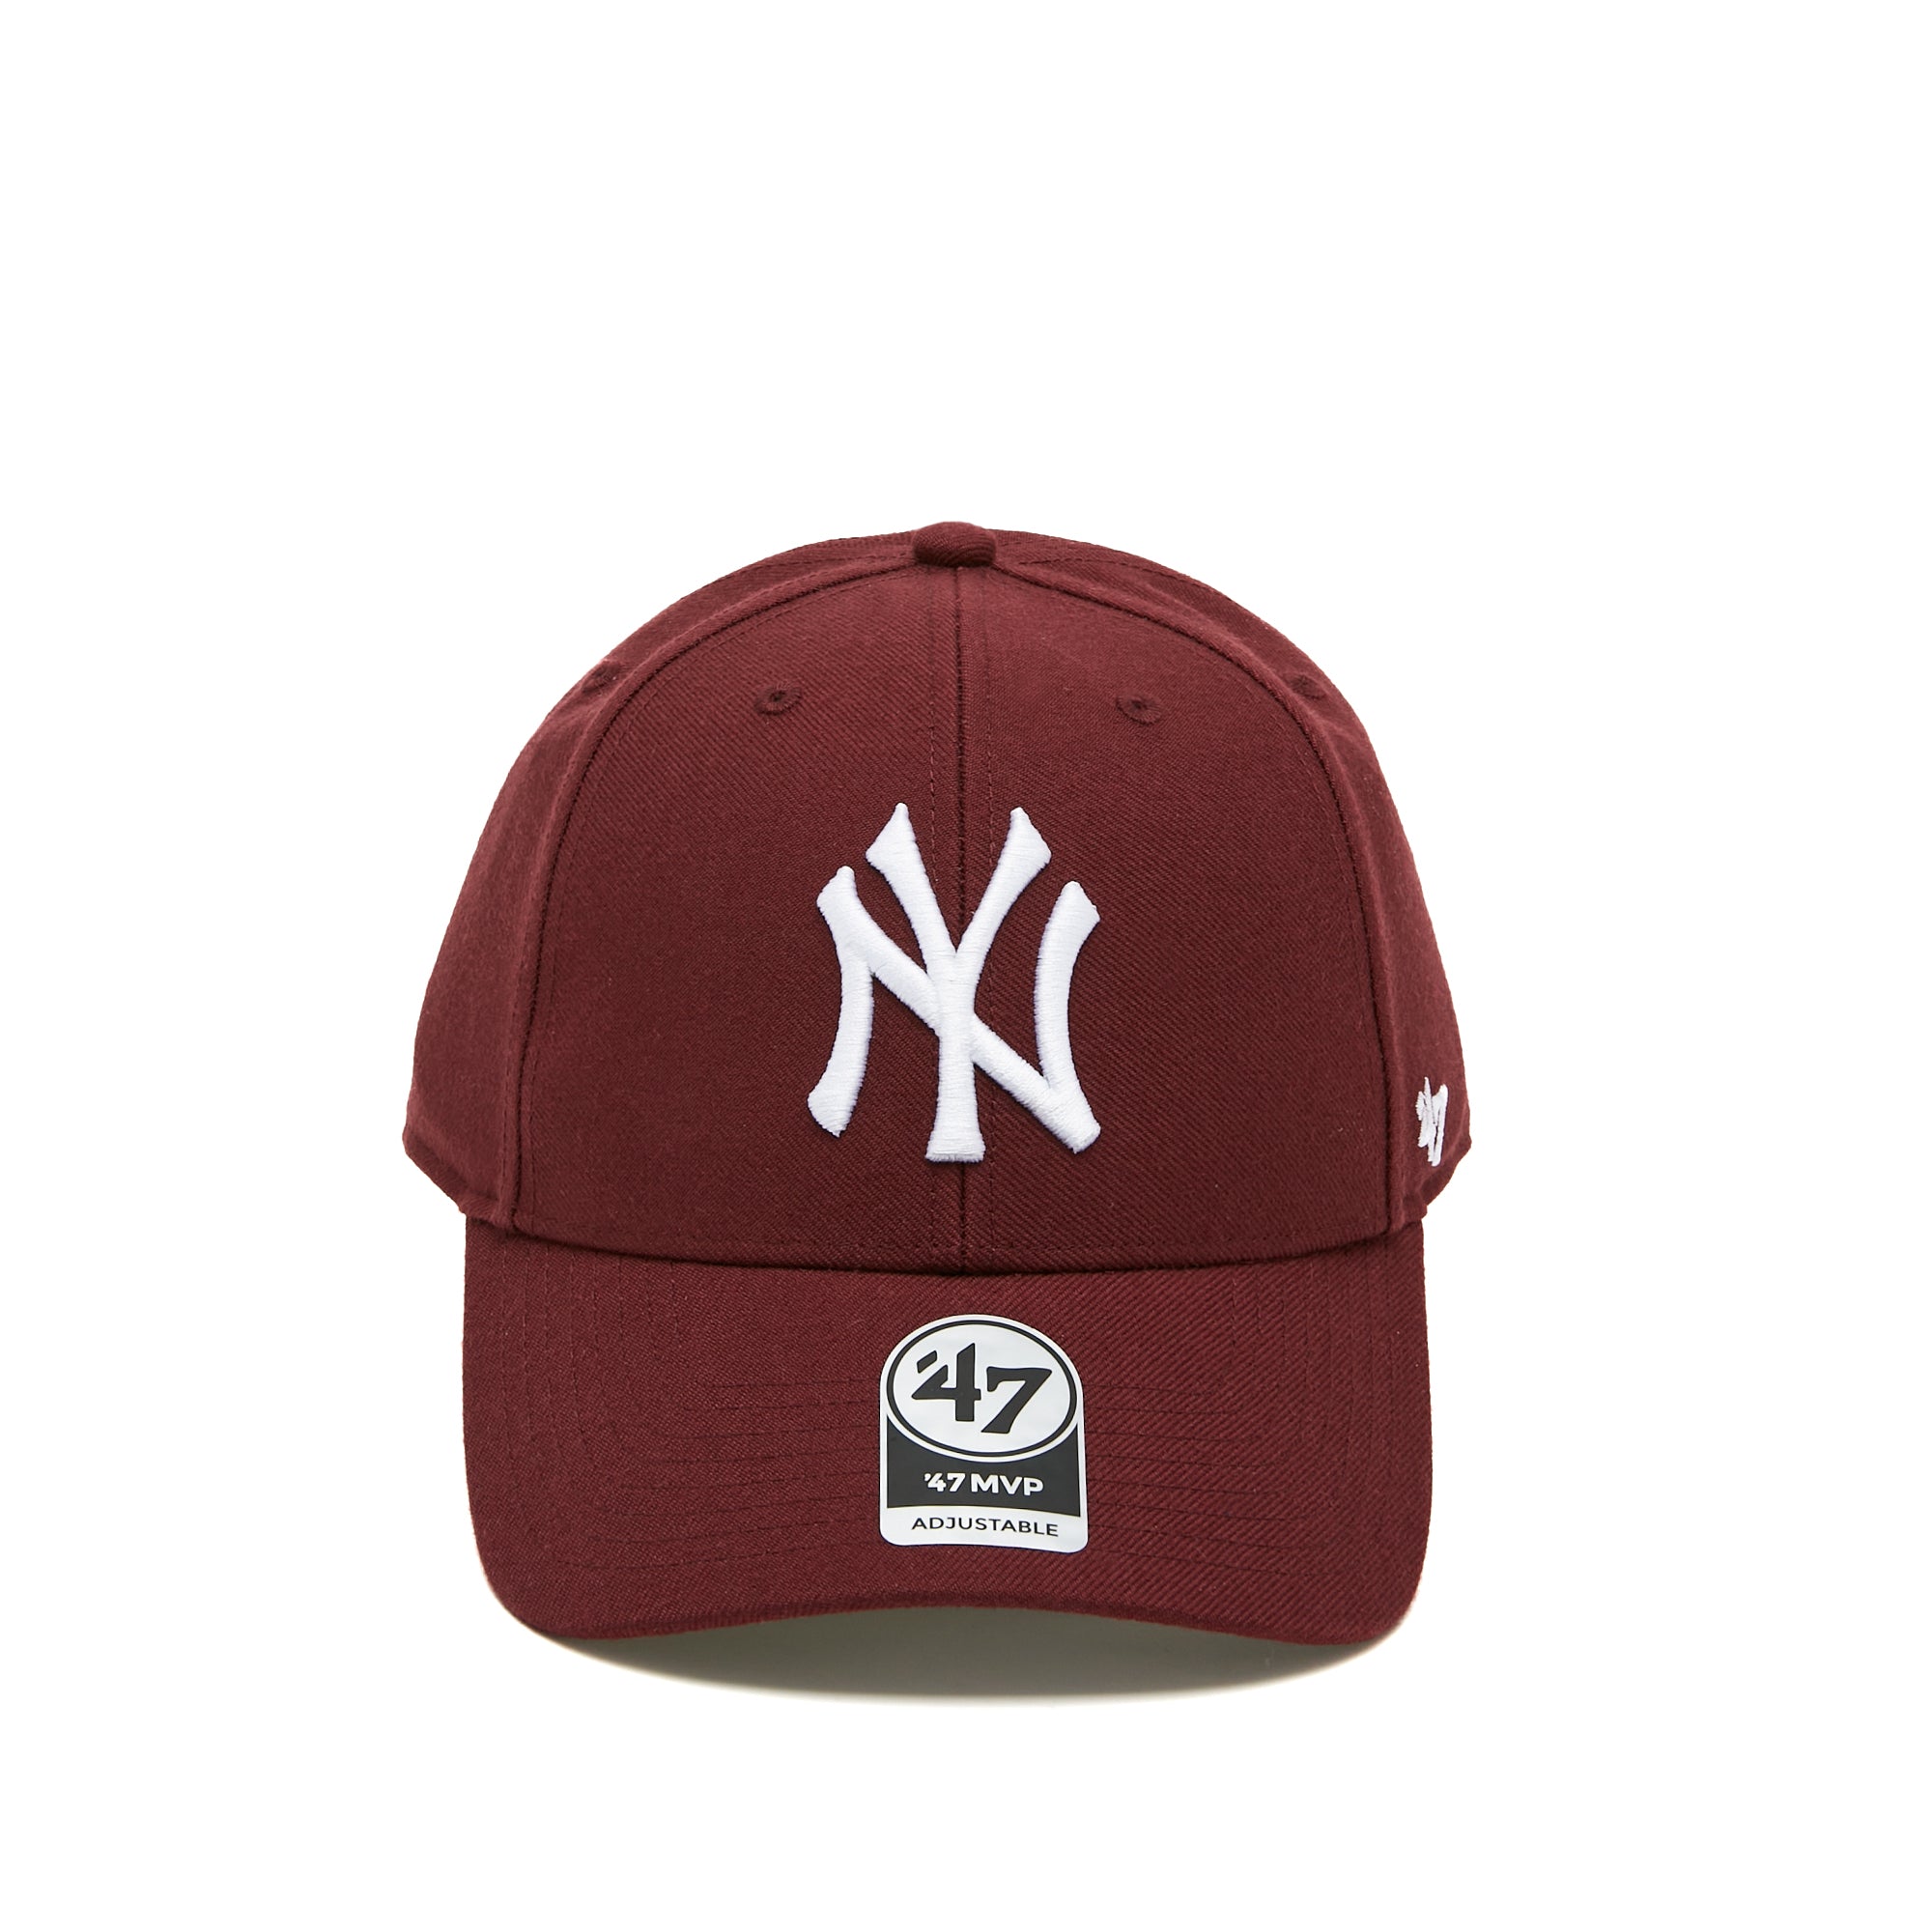 MLB New York Yankees '47 MVP Cap Dark Maroon One Size